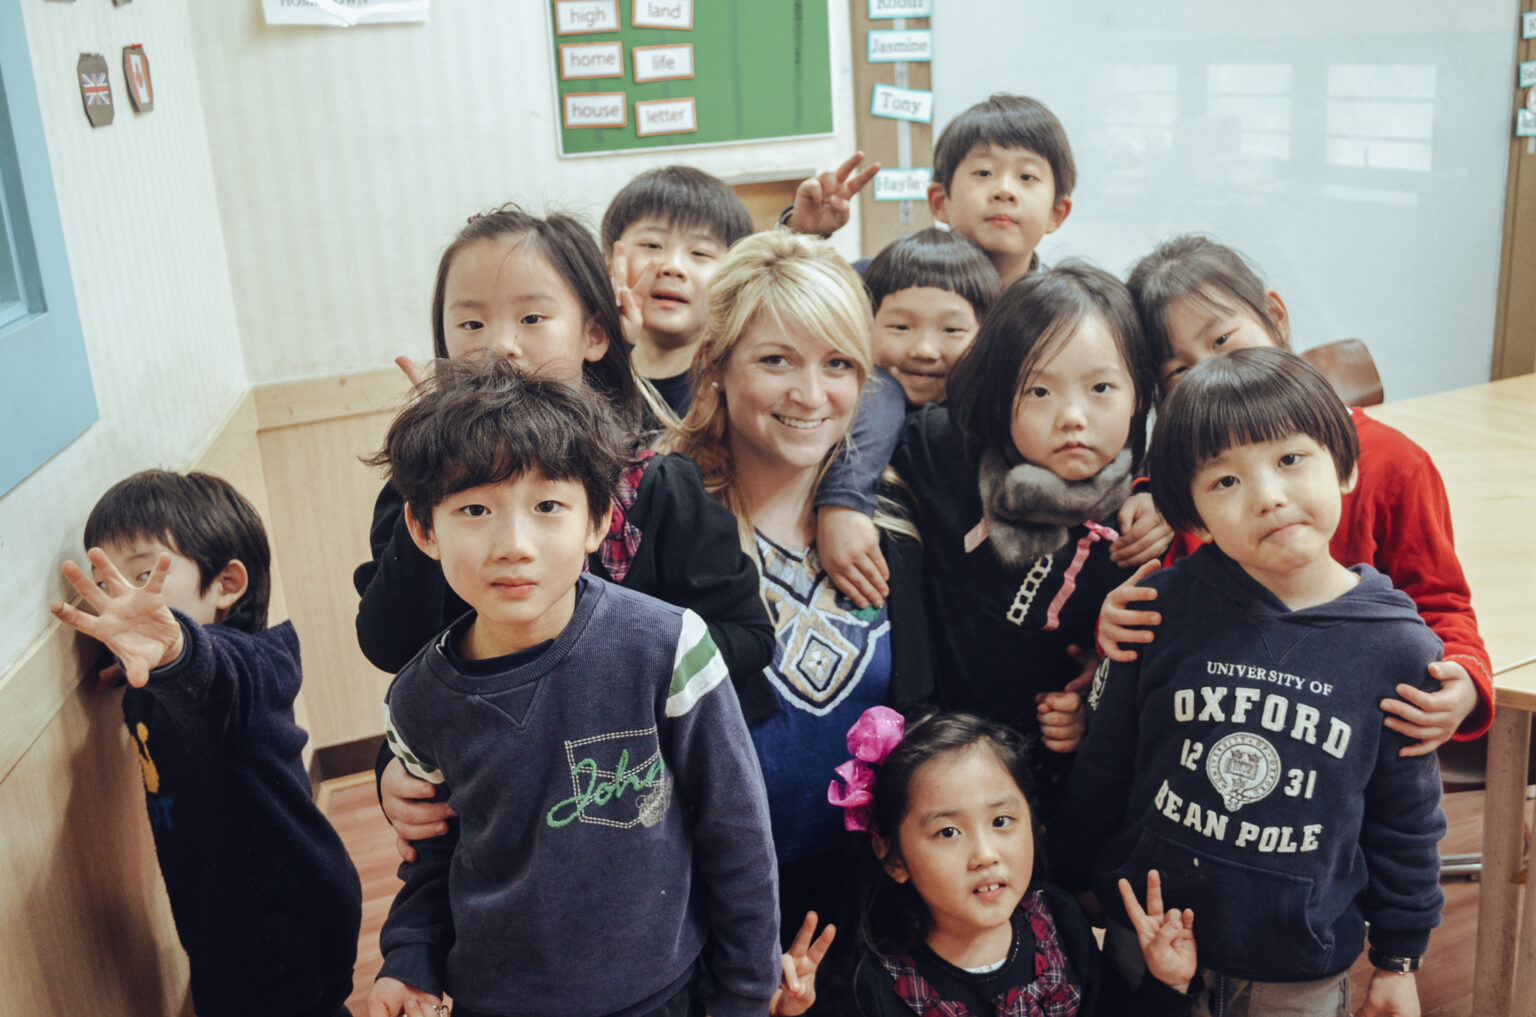 alexa with kids in South Korea as an ESL teacher